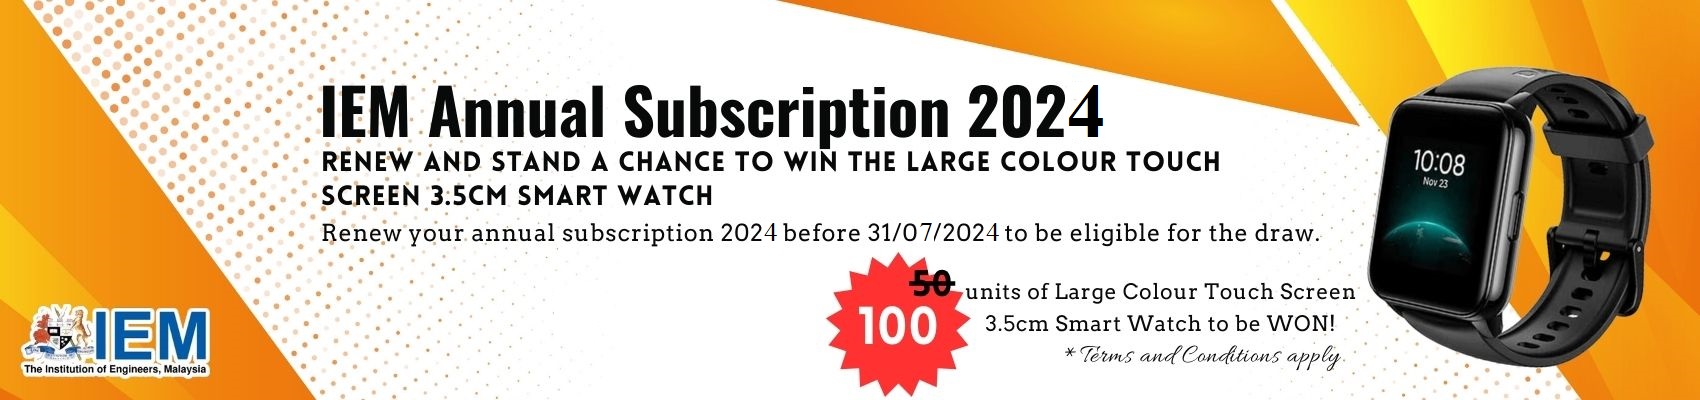 IEM Subscription 2023